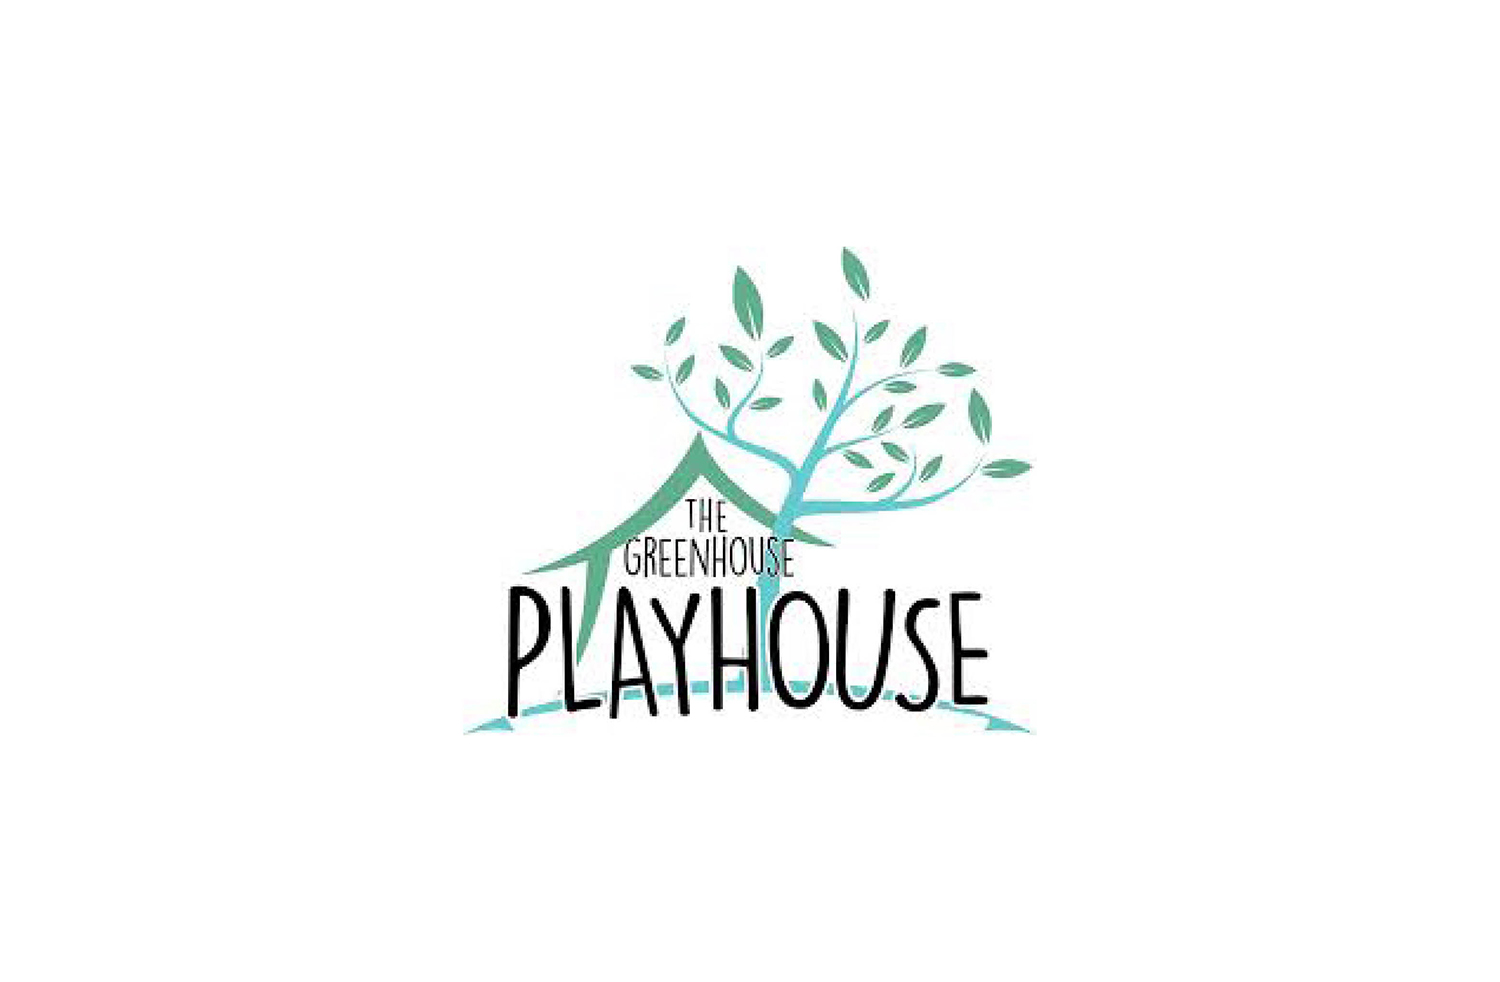 Boss_Display_Client_The_Greenhouse_Playhouse_Logo.jpg